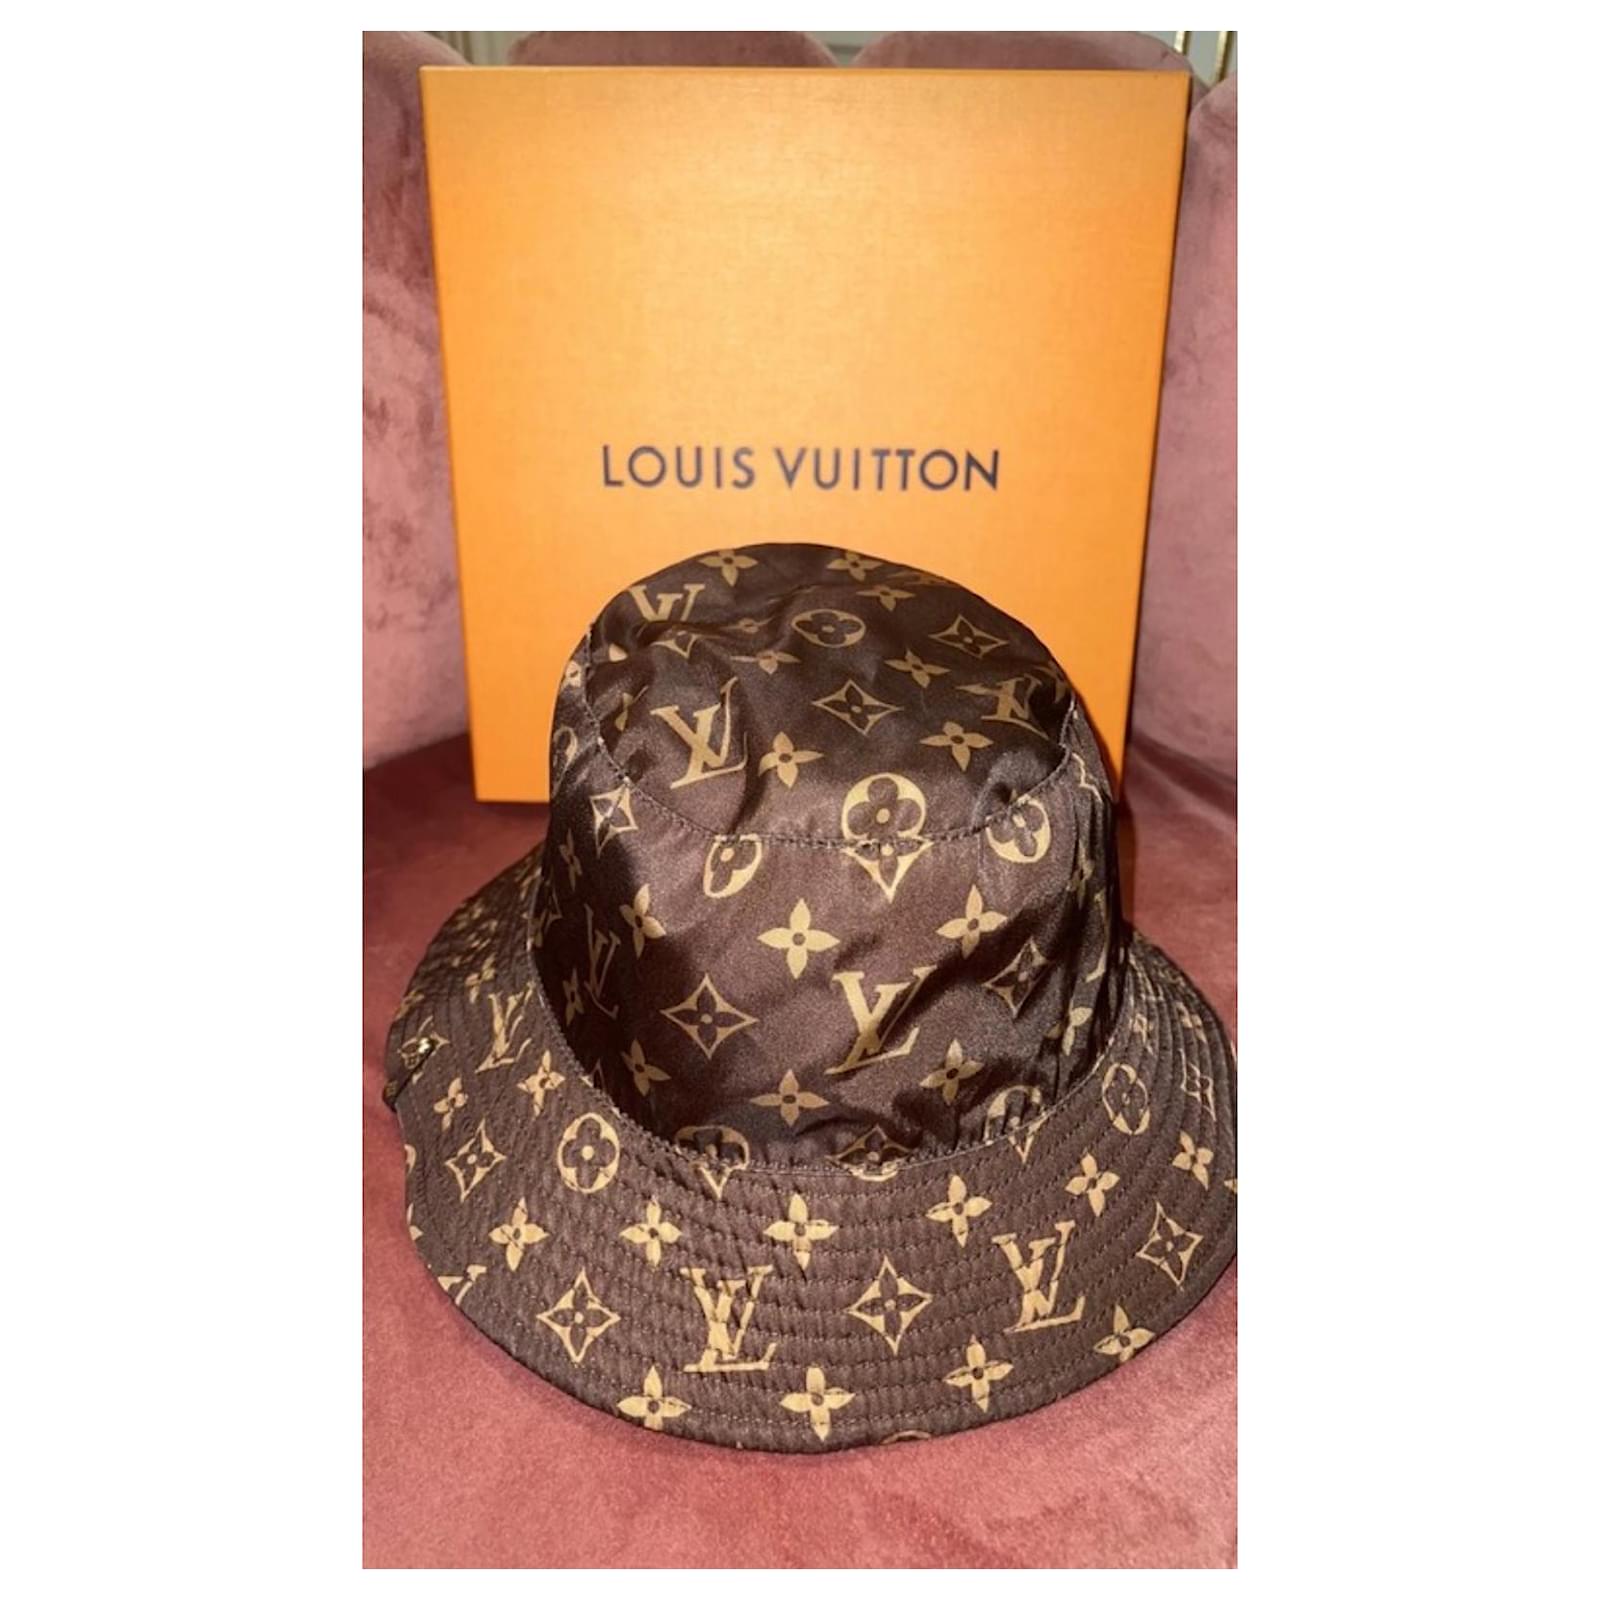 Brown Monogram Louis Vuitton Bucket Hat - HypedEffect